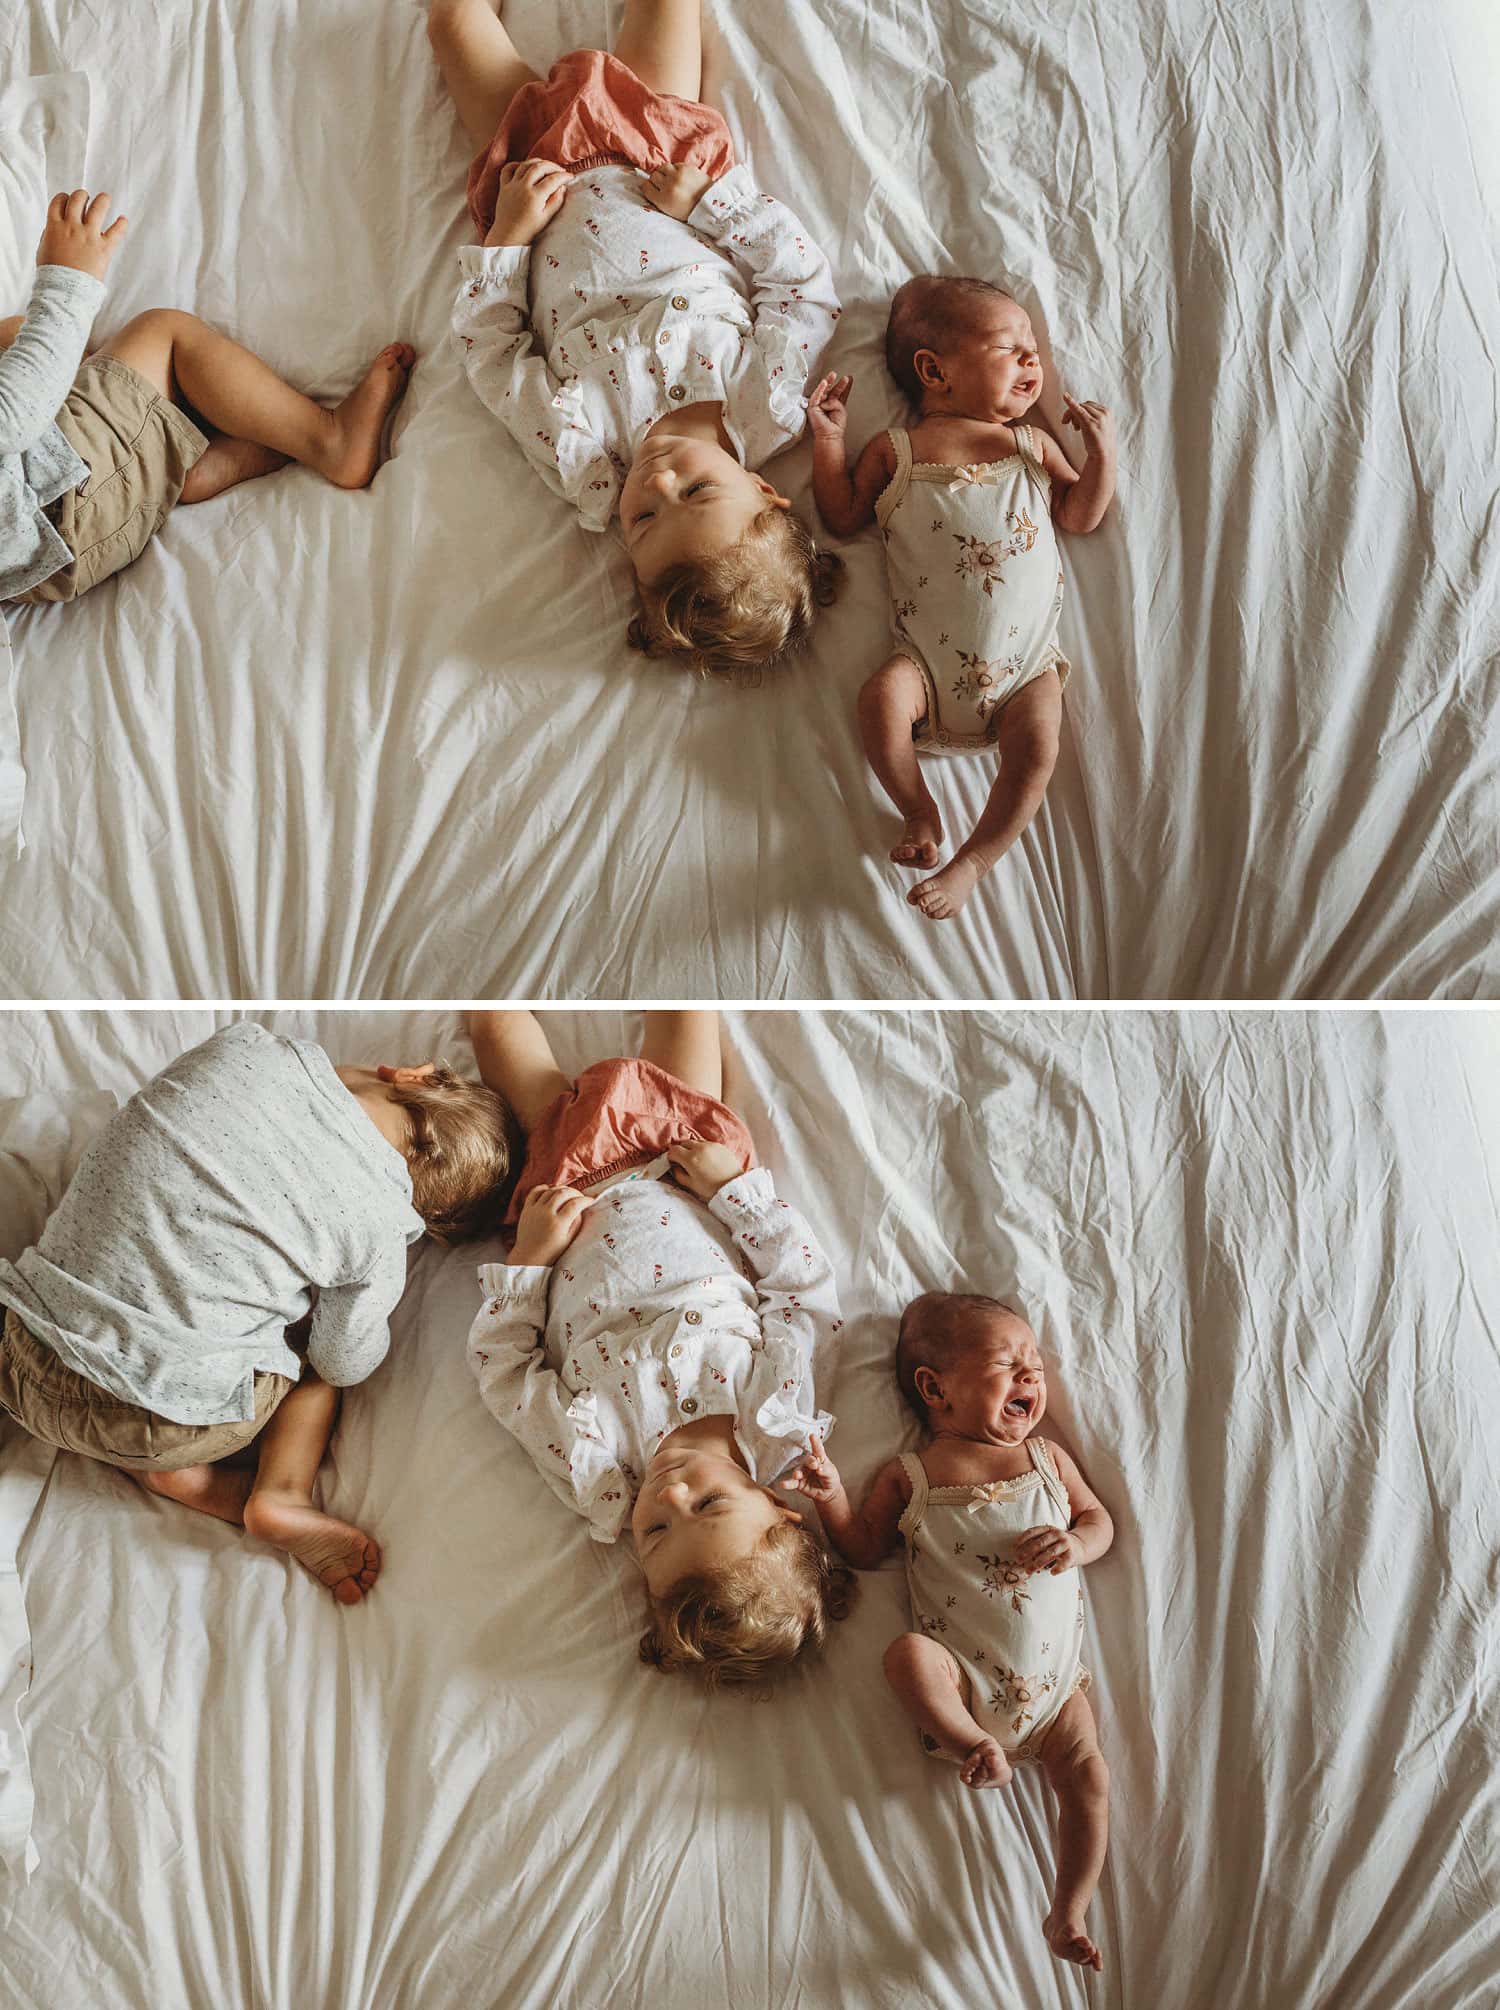 Twin-toddlers-andnewborn-phtography-sydney-f10